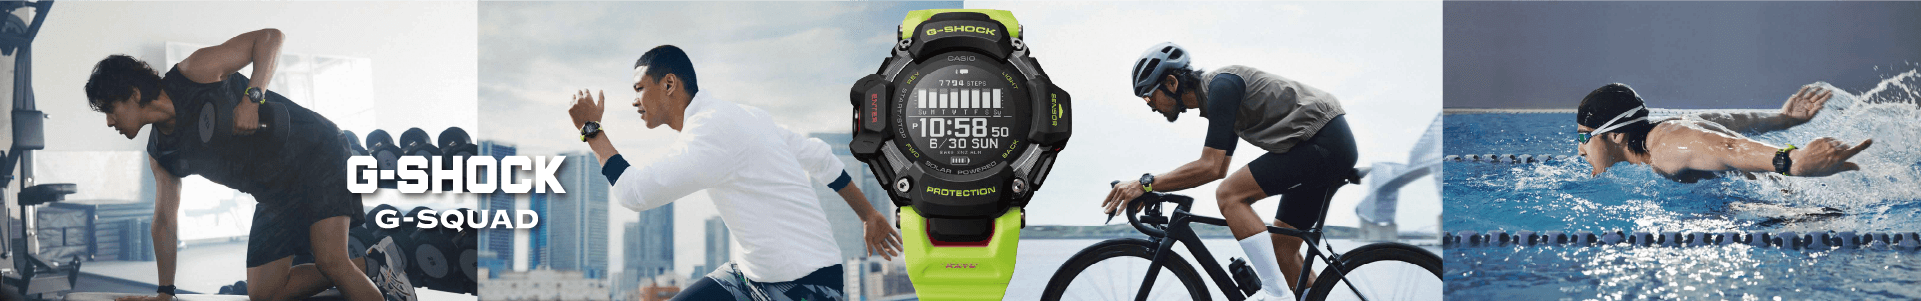 Relojes Casio G-Shock